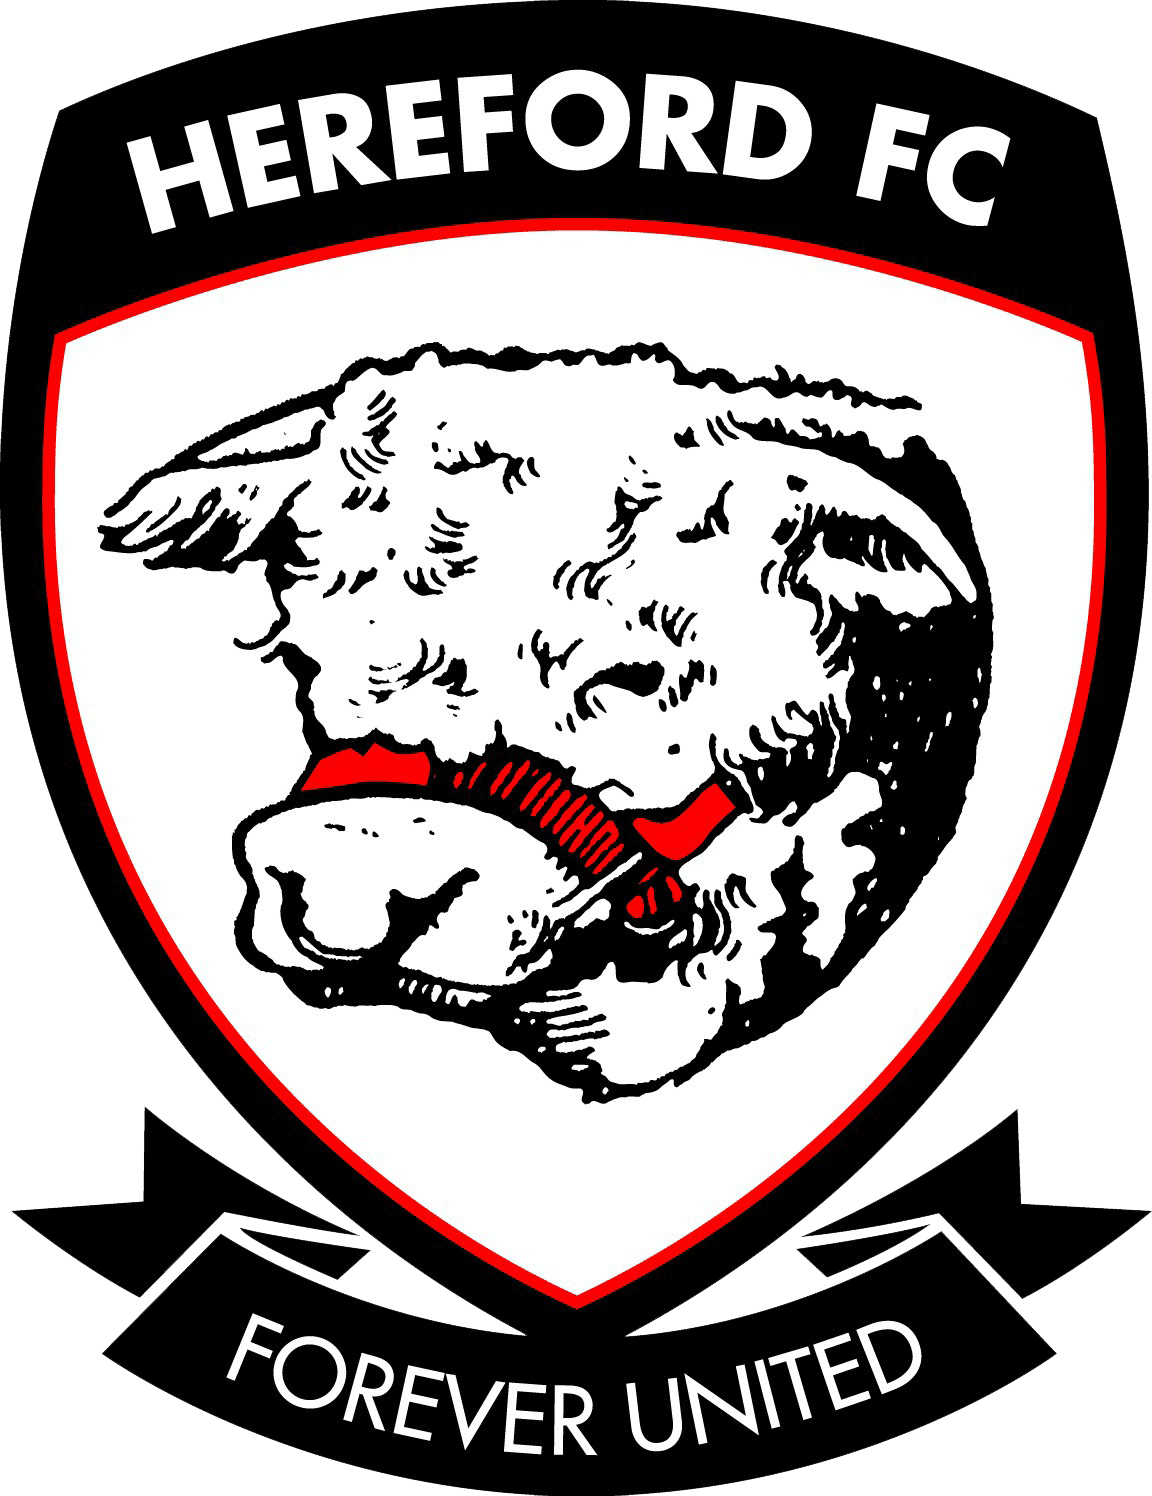 Hereford FC